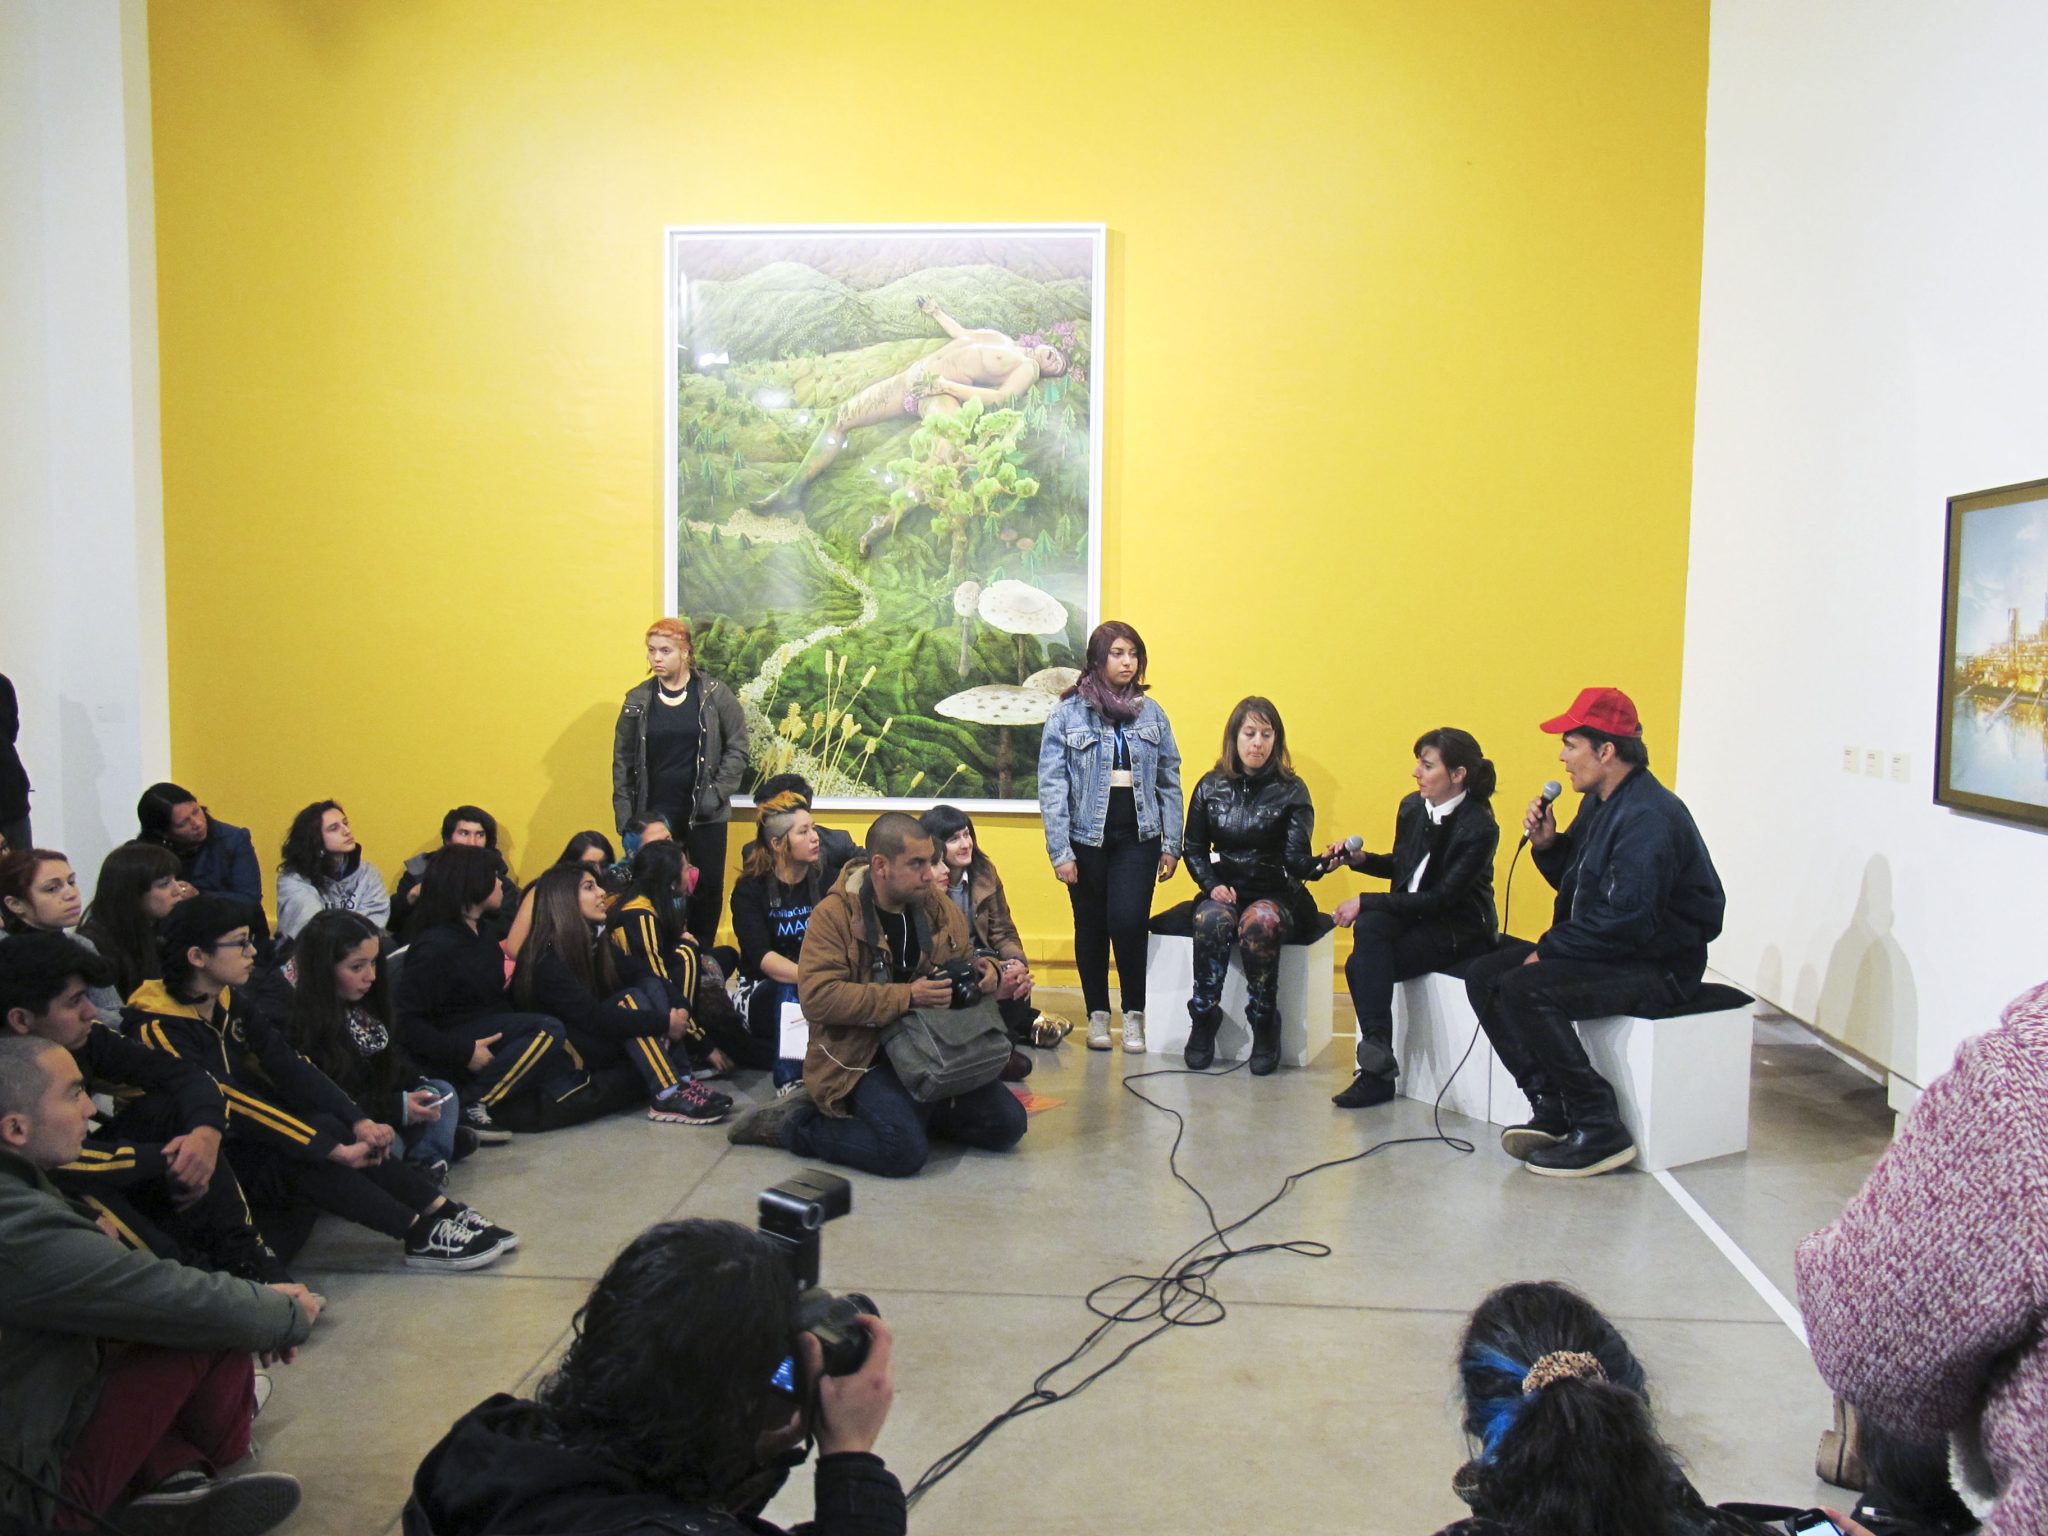 David LaChapelle | MUSEO DE ARTE CONTEMPORÁNEO, Santiago, Chile, July 20 - September 27, 2015 | 13